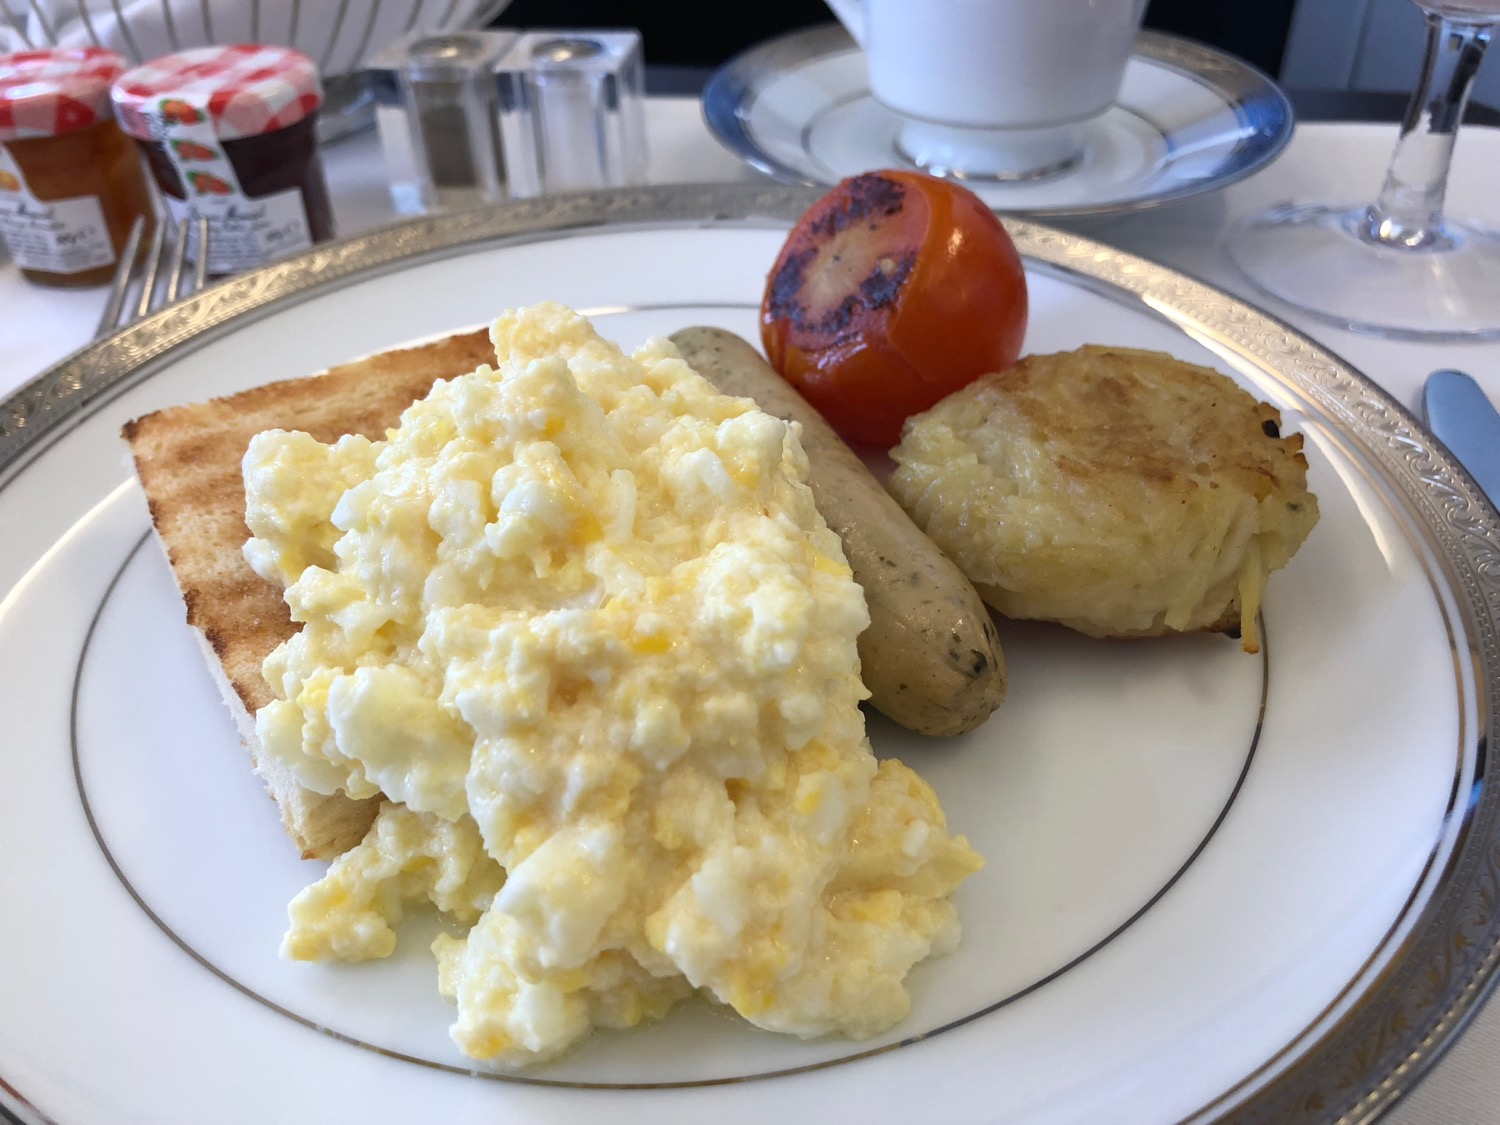 a plate of breakfast food